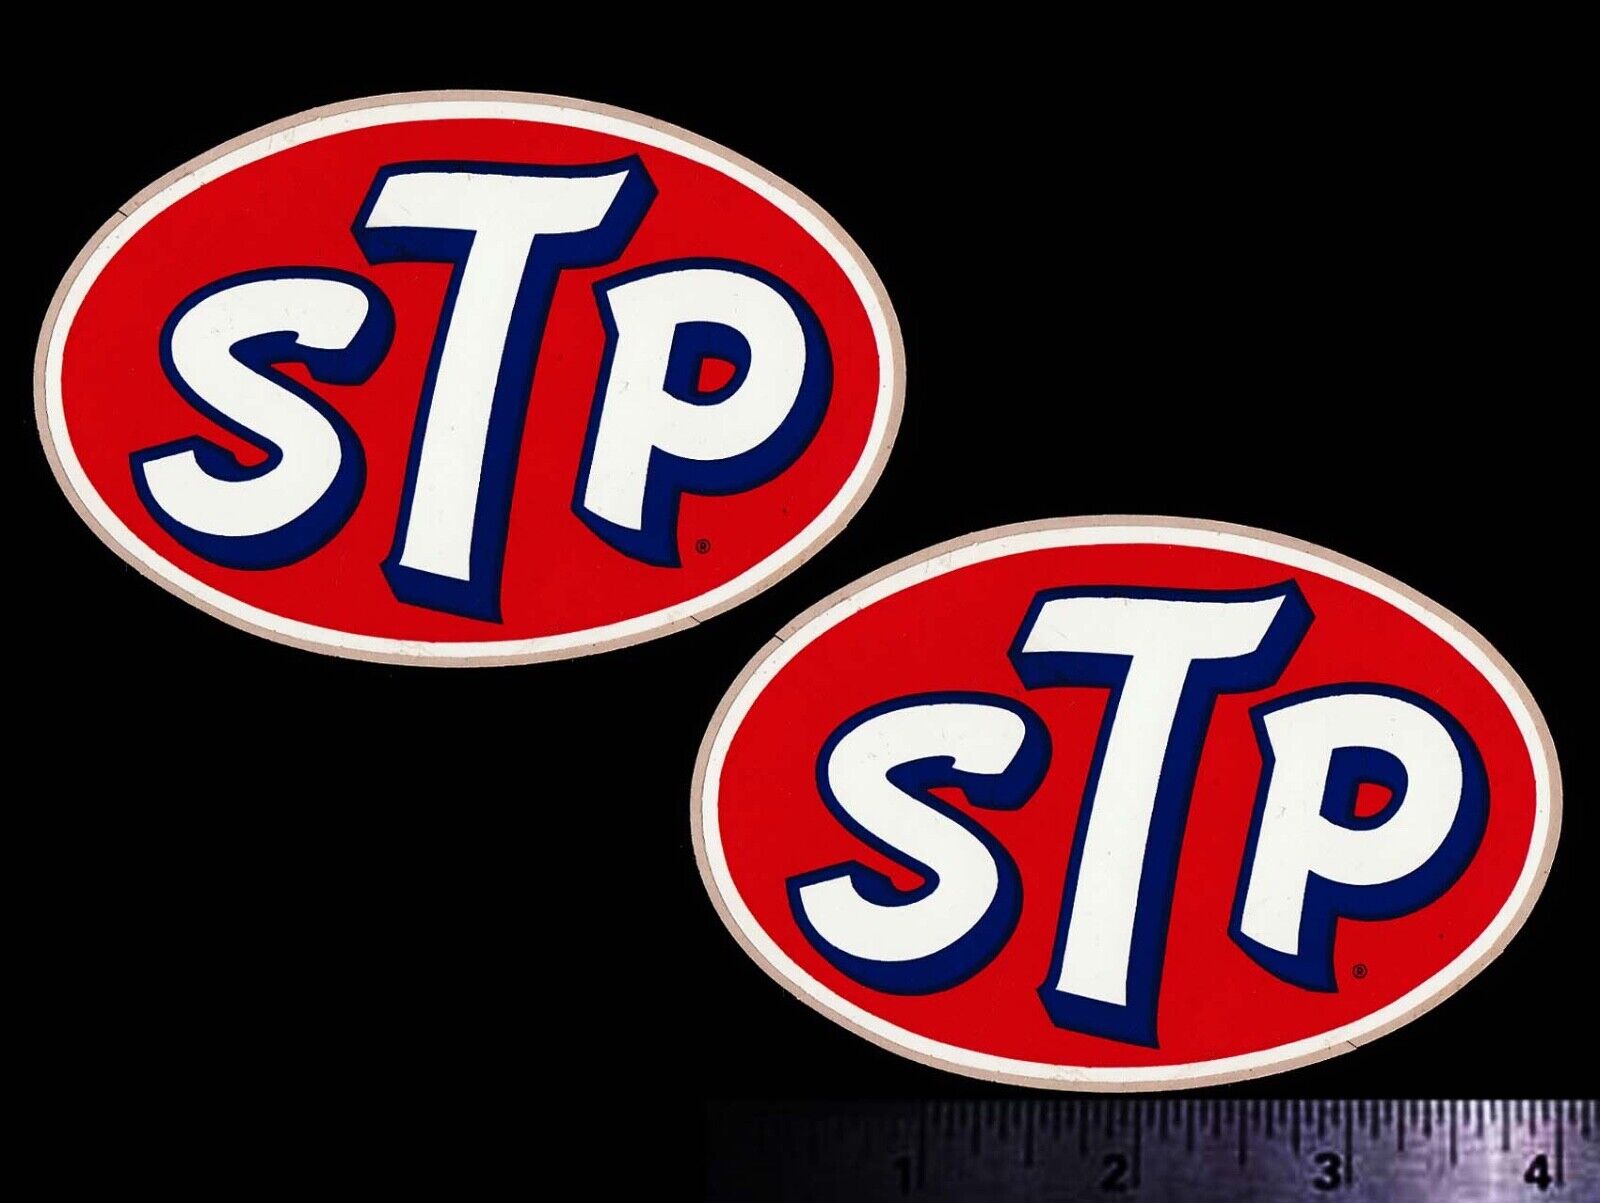 STP - Set of 2 Original Vintage 1960's 70's Racing Decals/Stickers - 4 Inch size